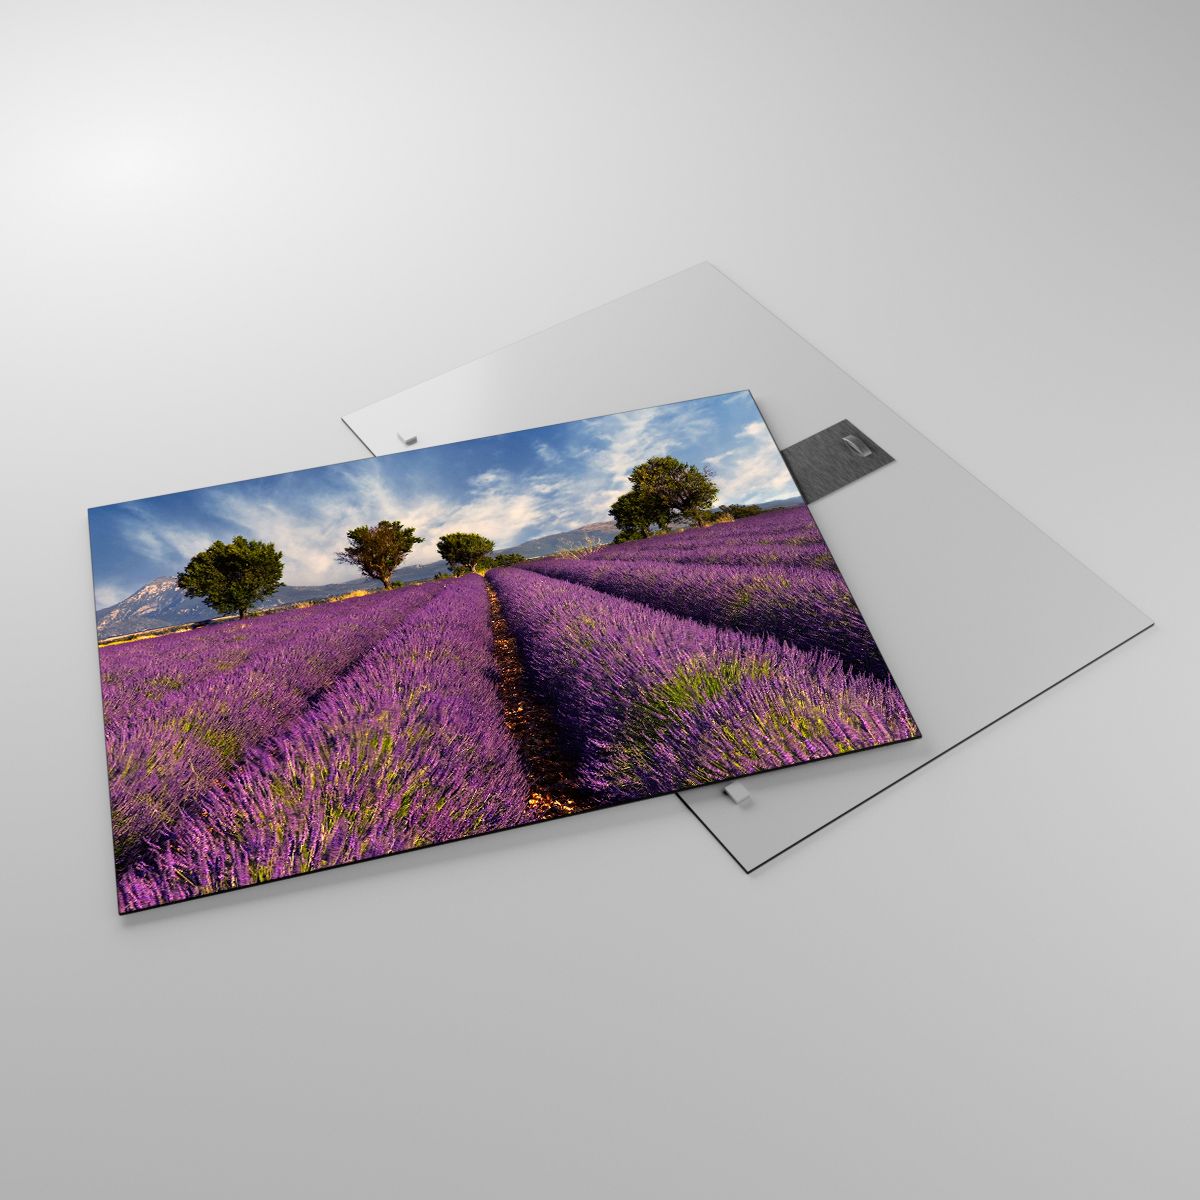 Glasbild Landschaft, Glasbild Natur, Glasbild Lavendel, Glasbild Frankreich, Glasbild Landschaft